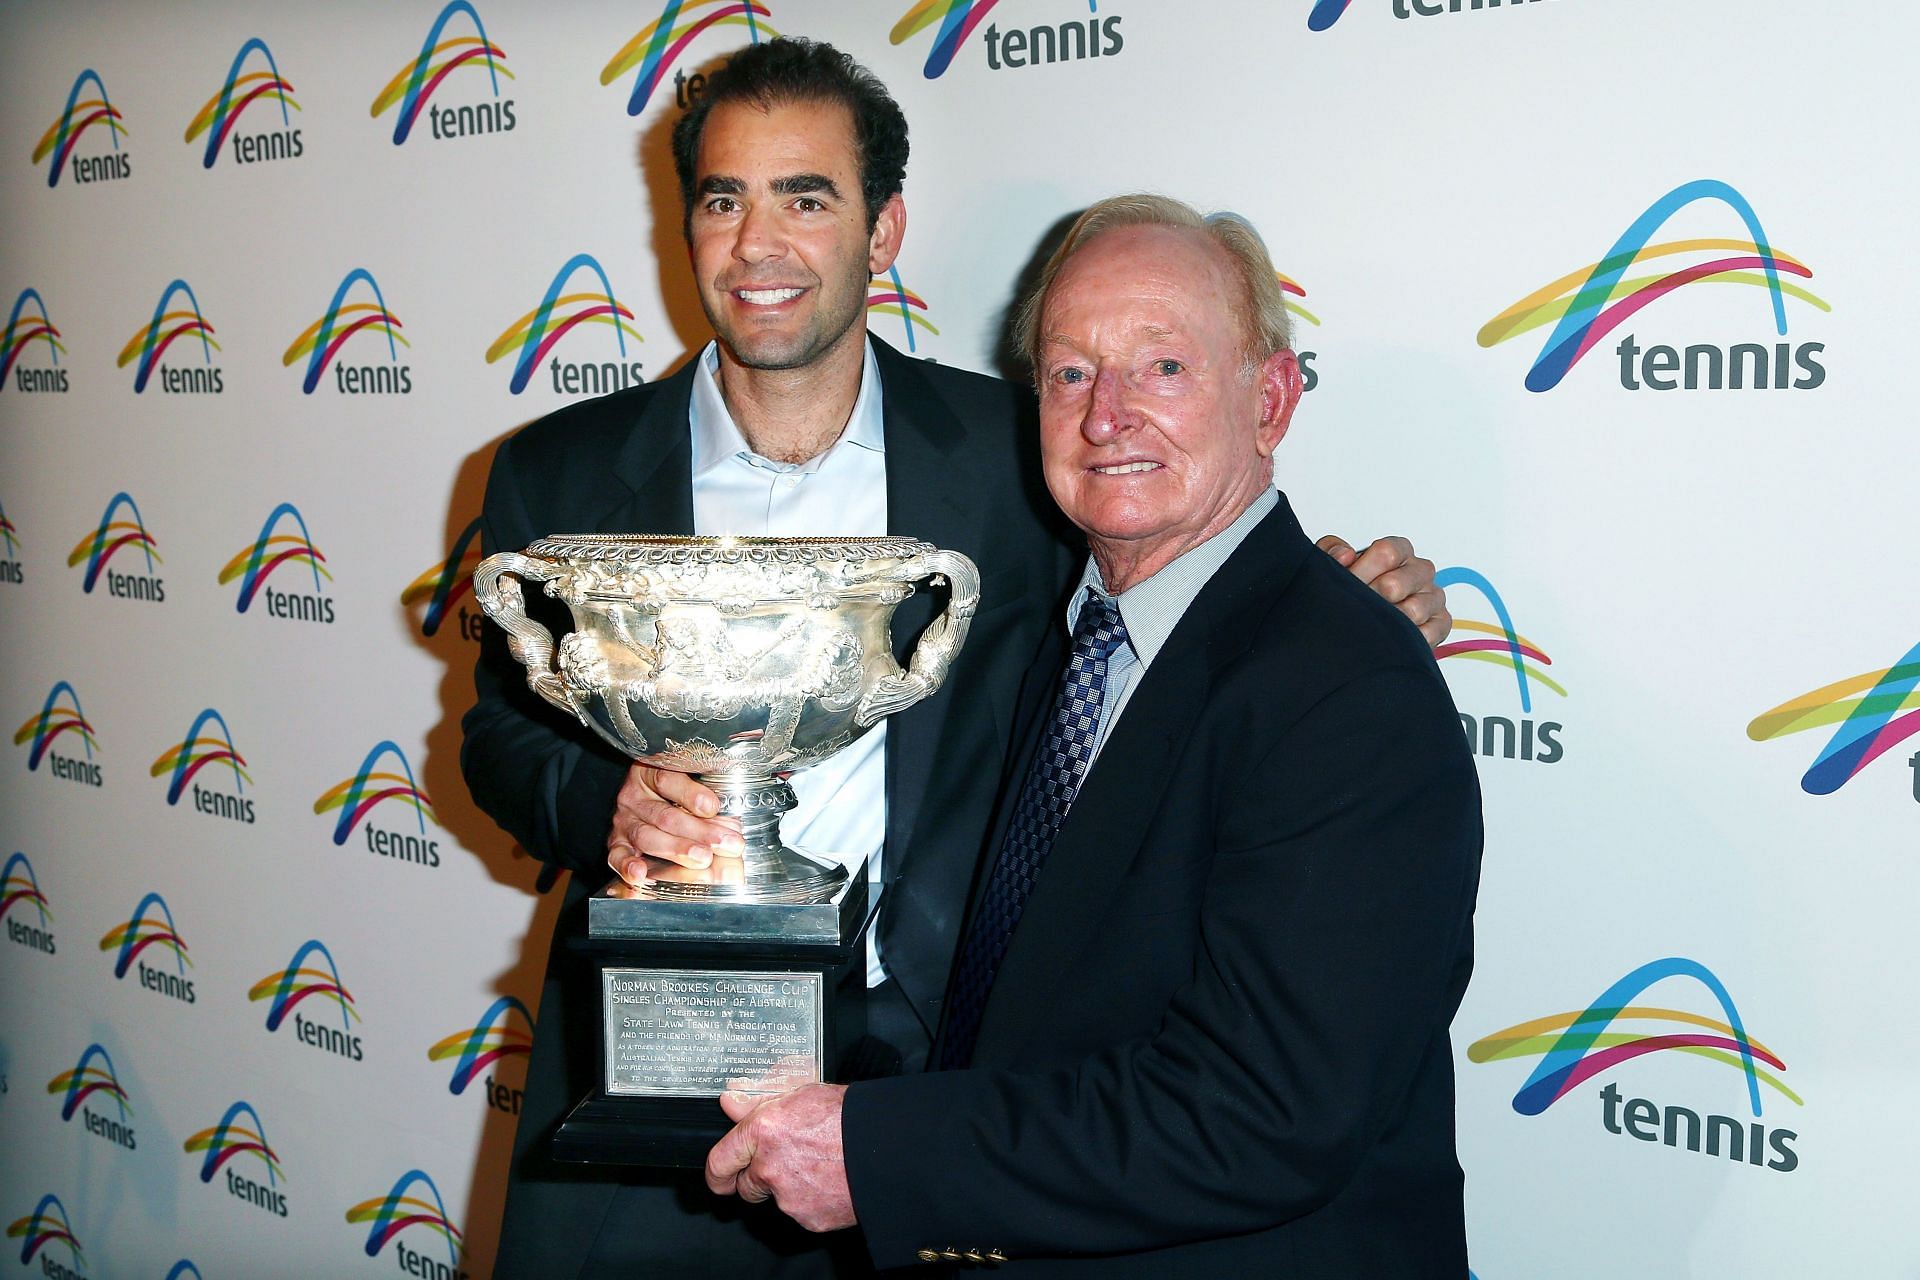 Pete Sampras(left) with Rod Laver(right) presenting the 2014 Australian Open